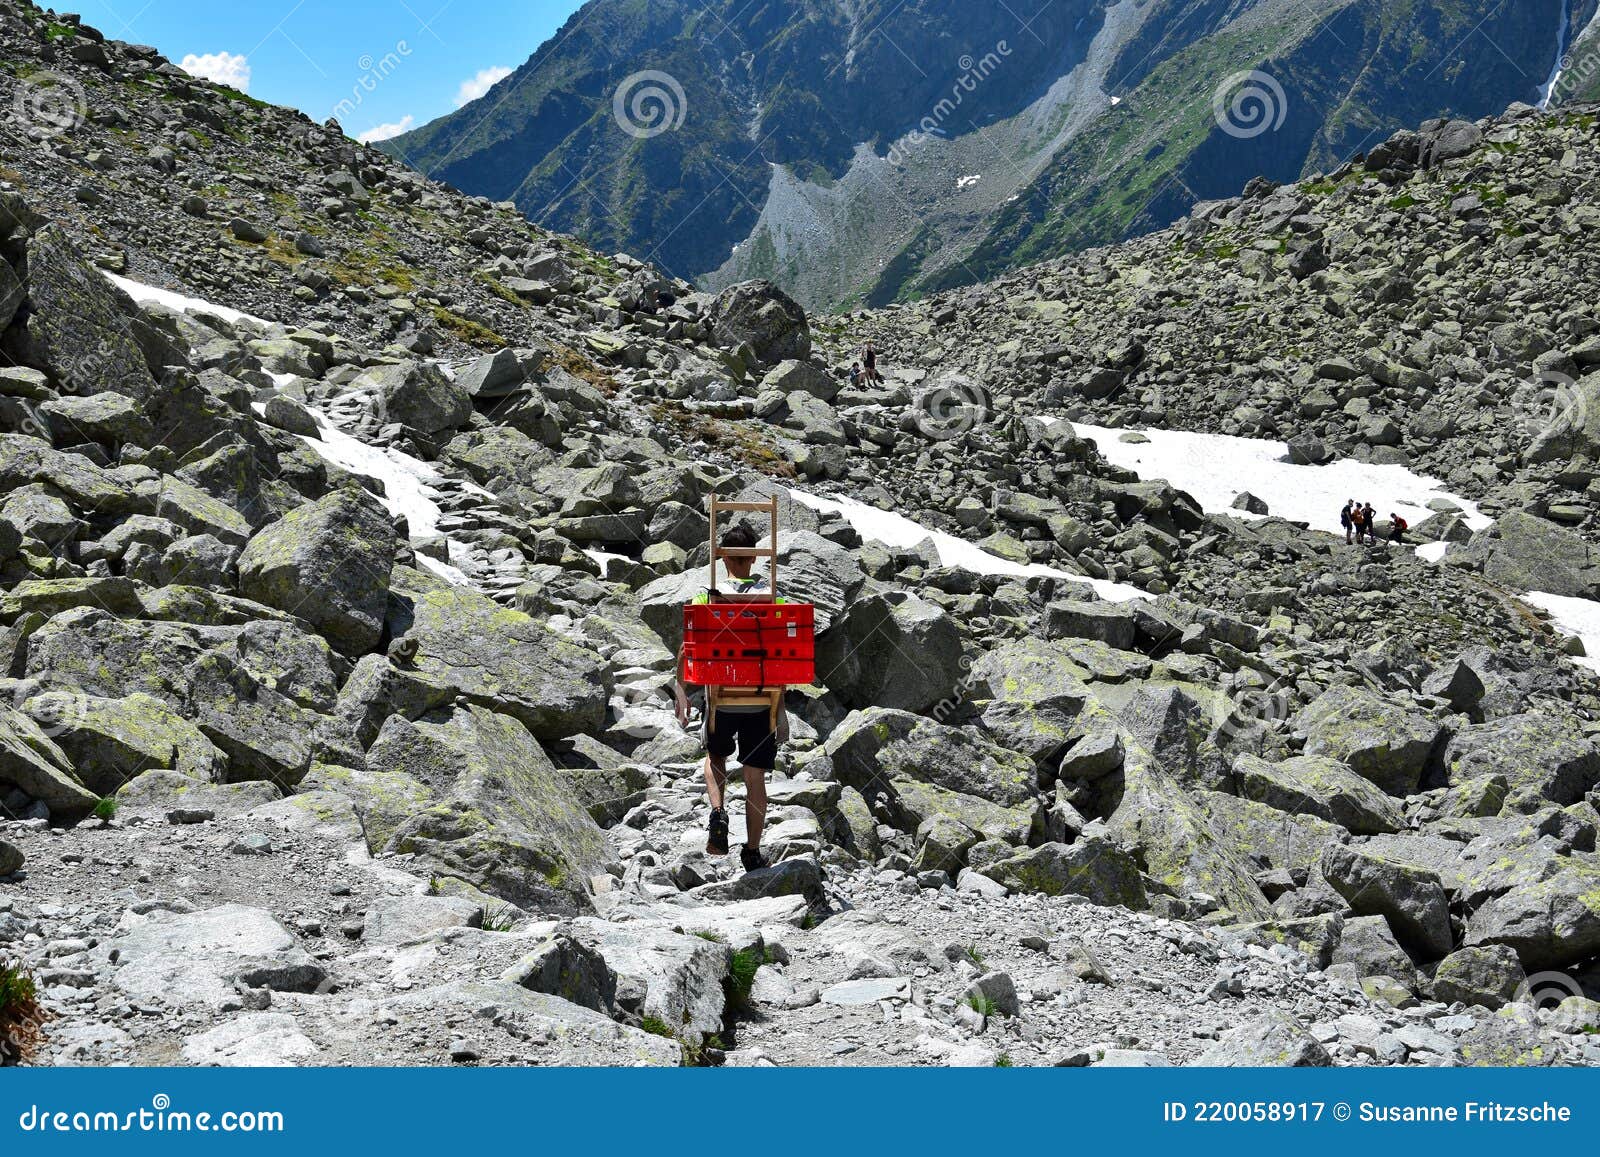 a man carrying boxes down from the mountain lodge chata pod rysmi near mount rysy, high tatras, slovakia